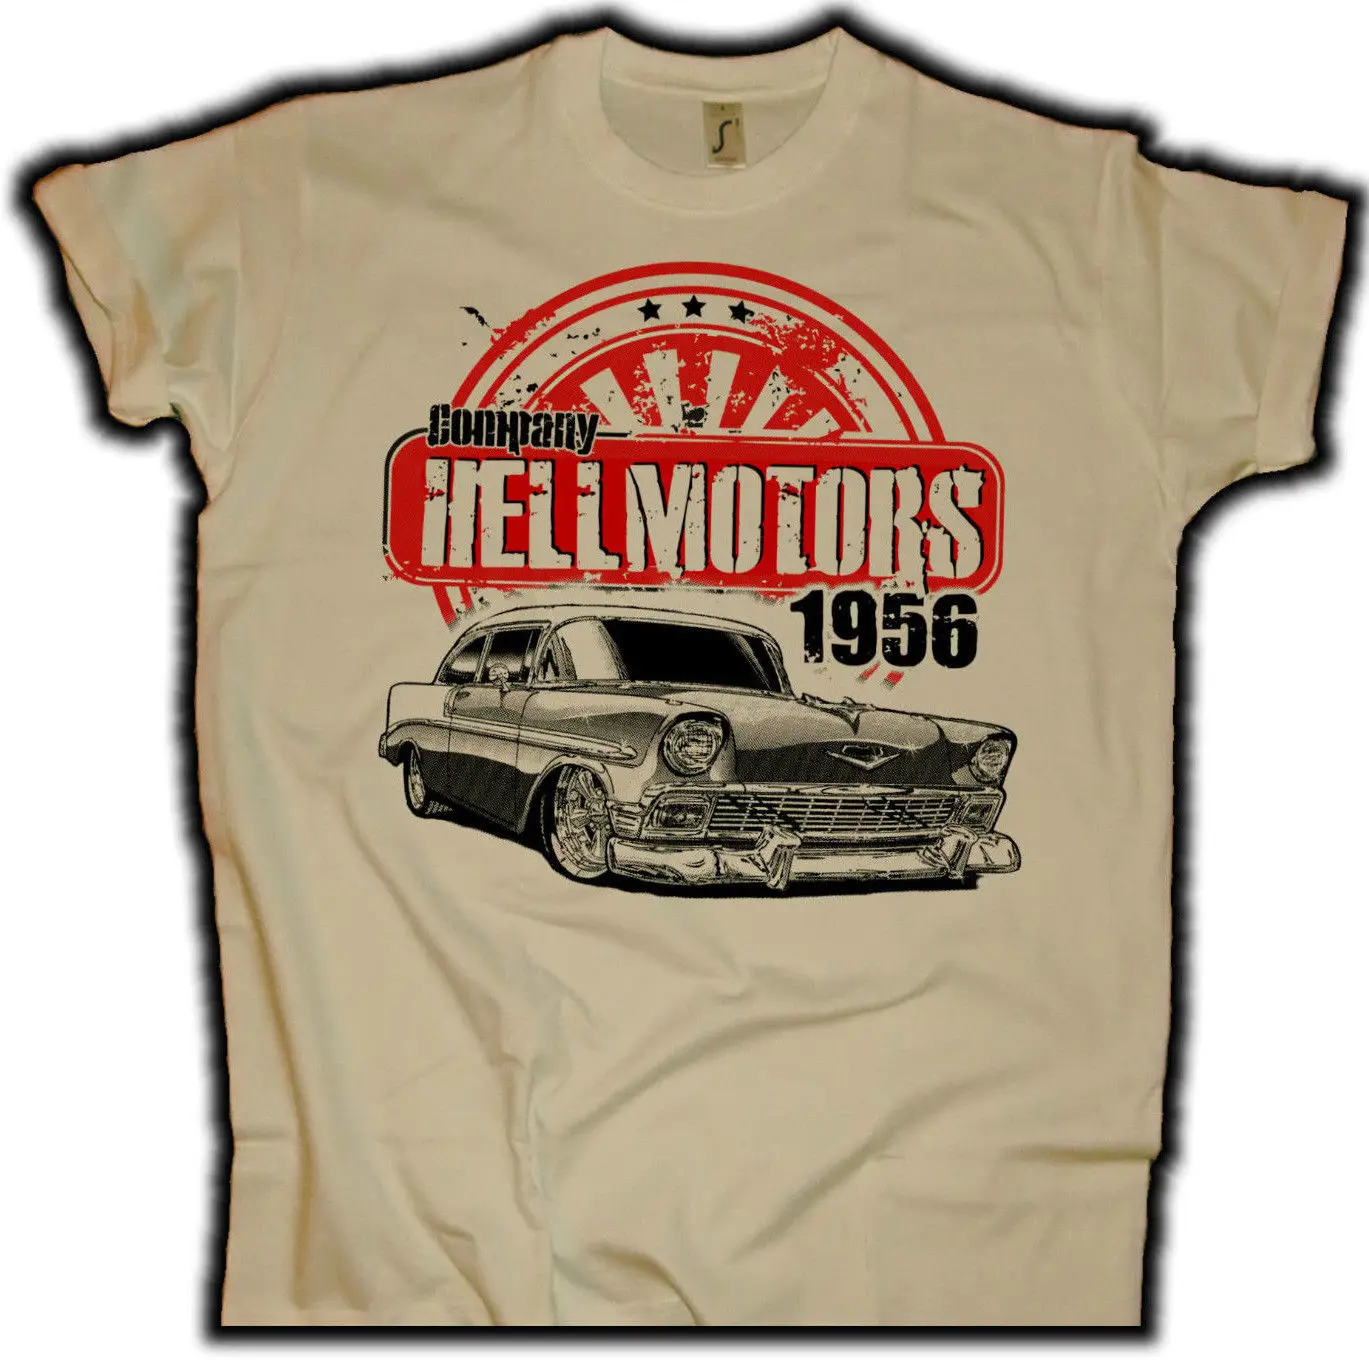 Модная мужская футболка Chevy 56 Sand US Muscle Car Herren футболка V8 Hot Rod Drag racing летняя школьная футболка